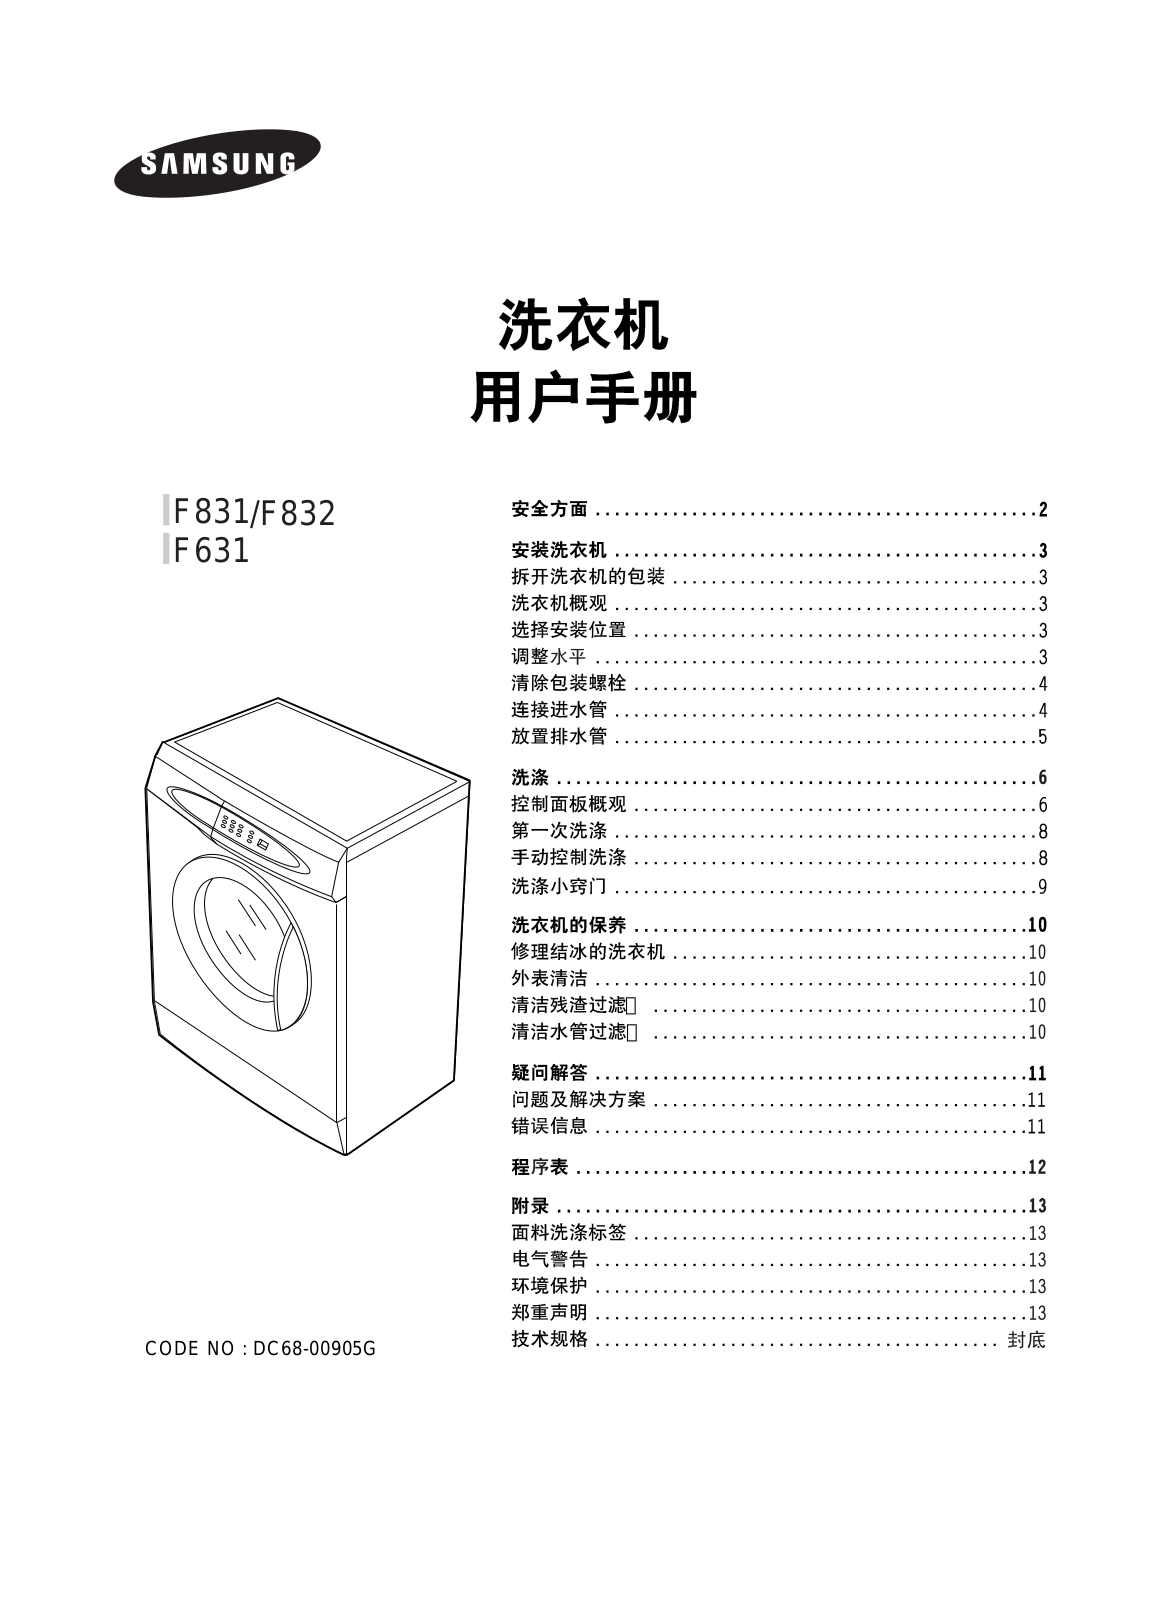 Samsung F831, F631 User Manual